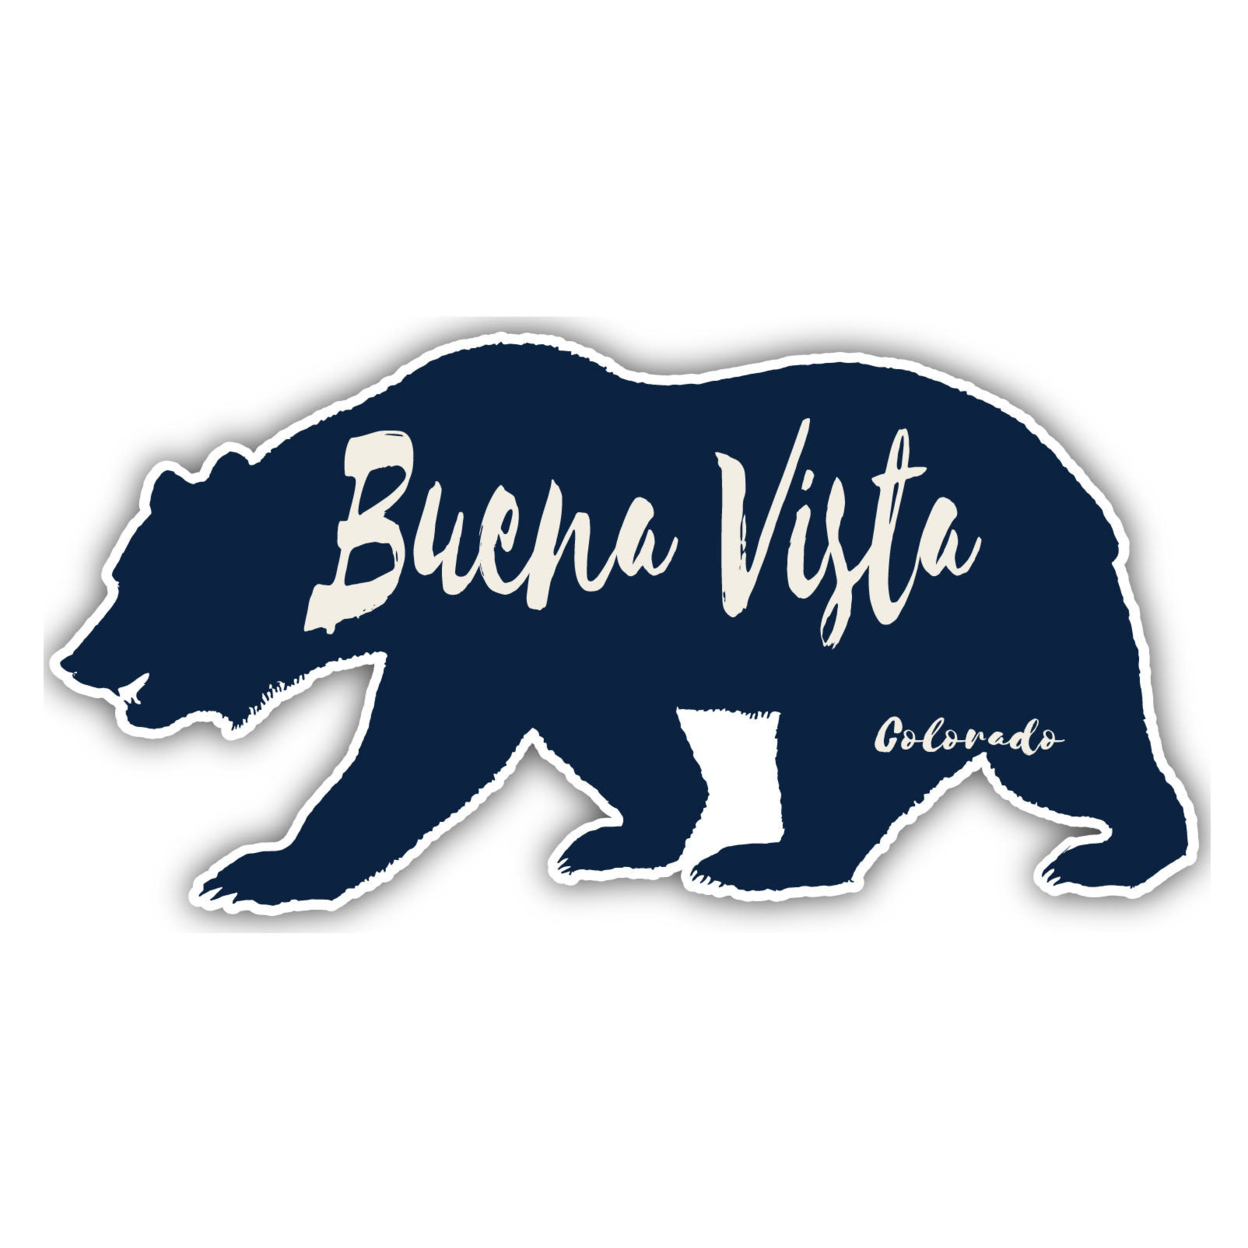 Buena Vista Colorado Souvenir Decorative Stickers (Choose Theme And Size) - 4-Pack, 12-Inch, Bear